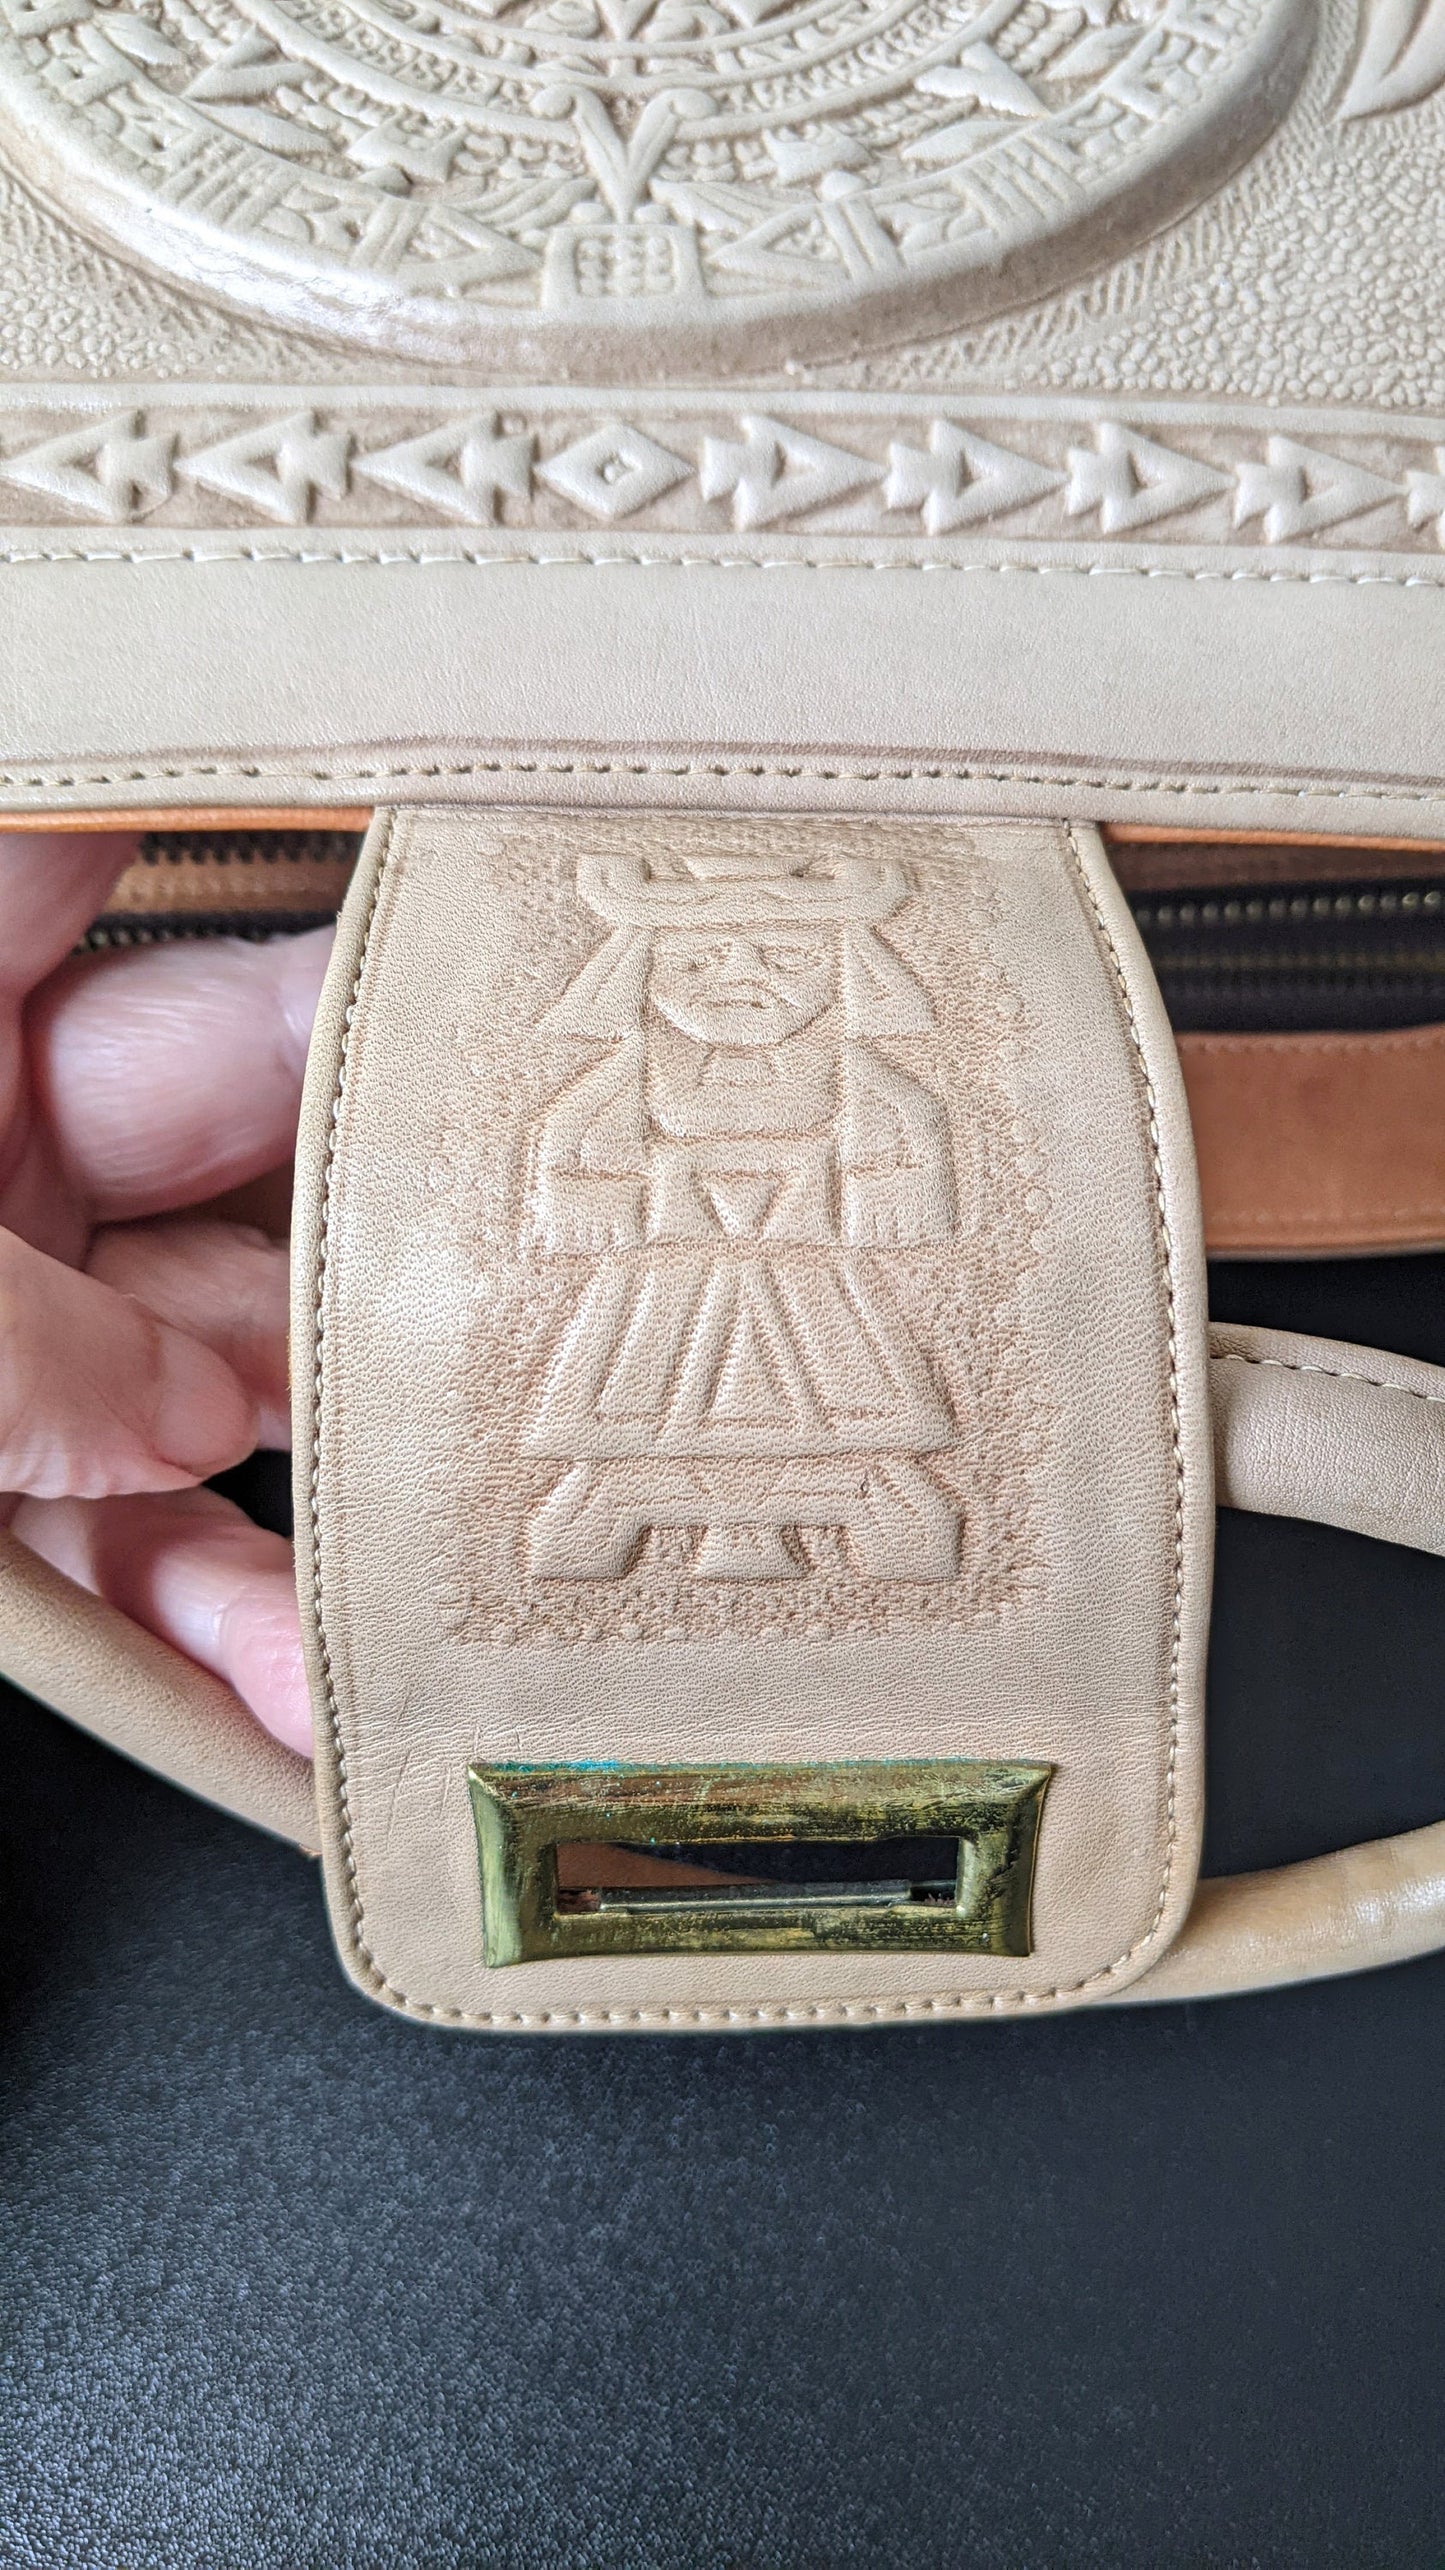 60s Tooled Leather Satchel with Mayan Calendar, Mexican Tourist Souvenir Bag